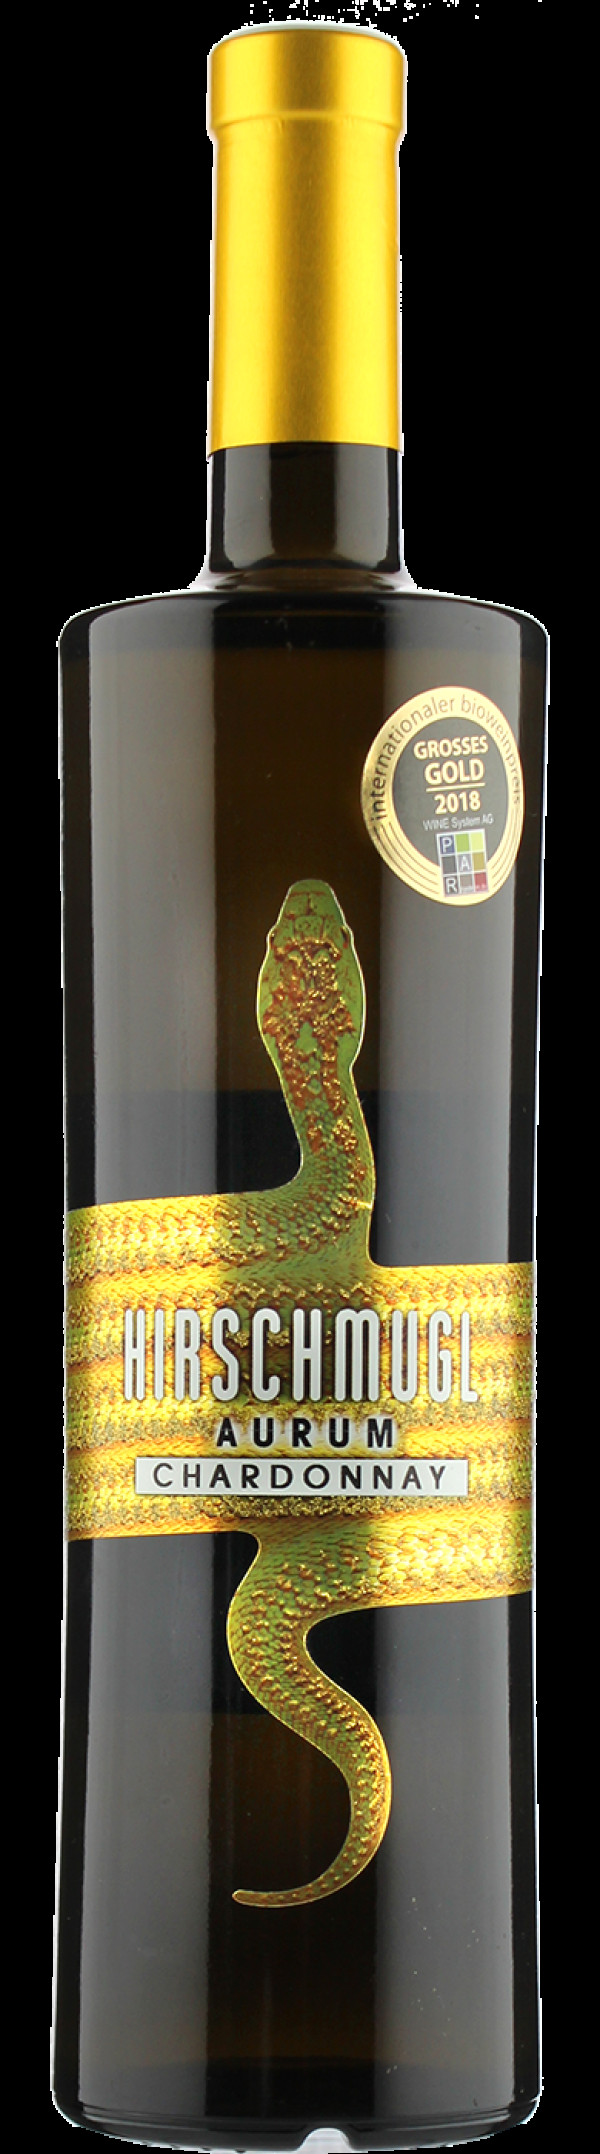 Chardonnay Aurum 2015 